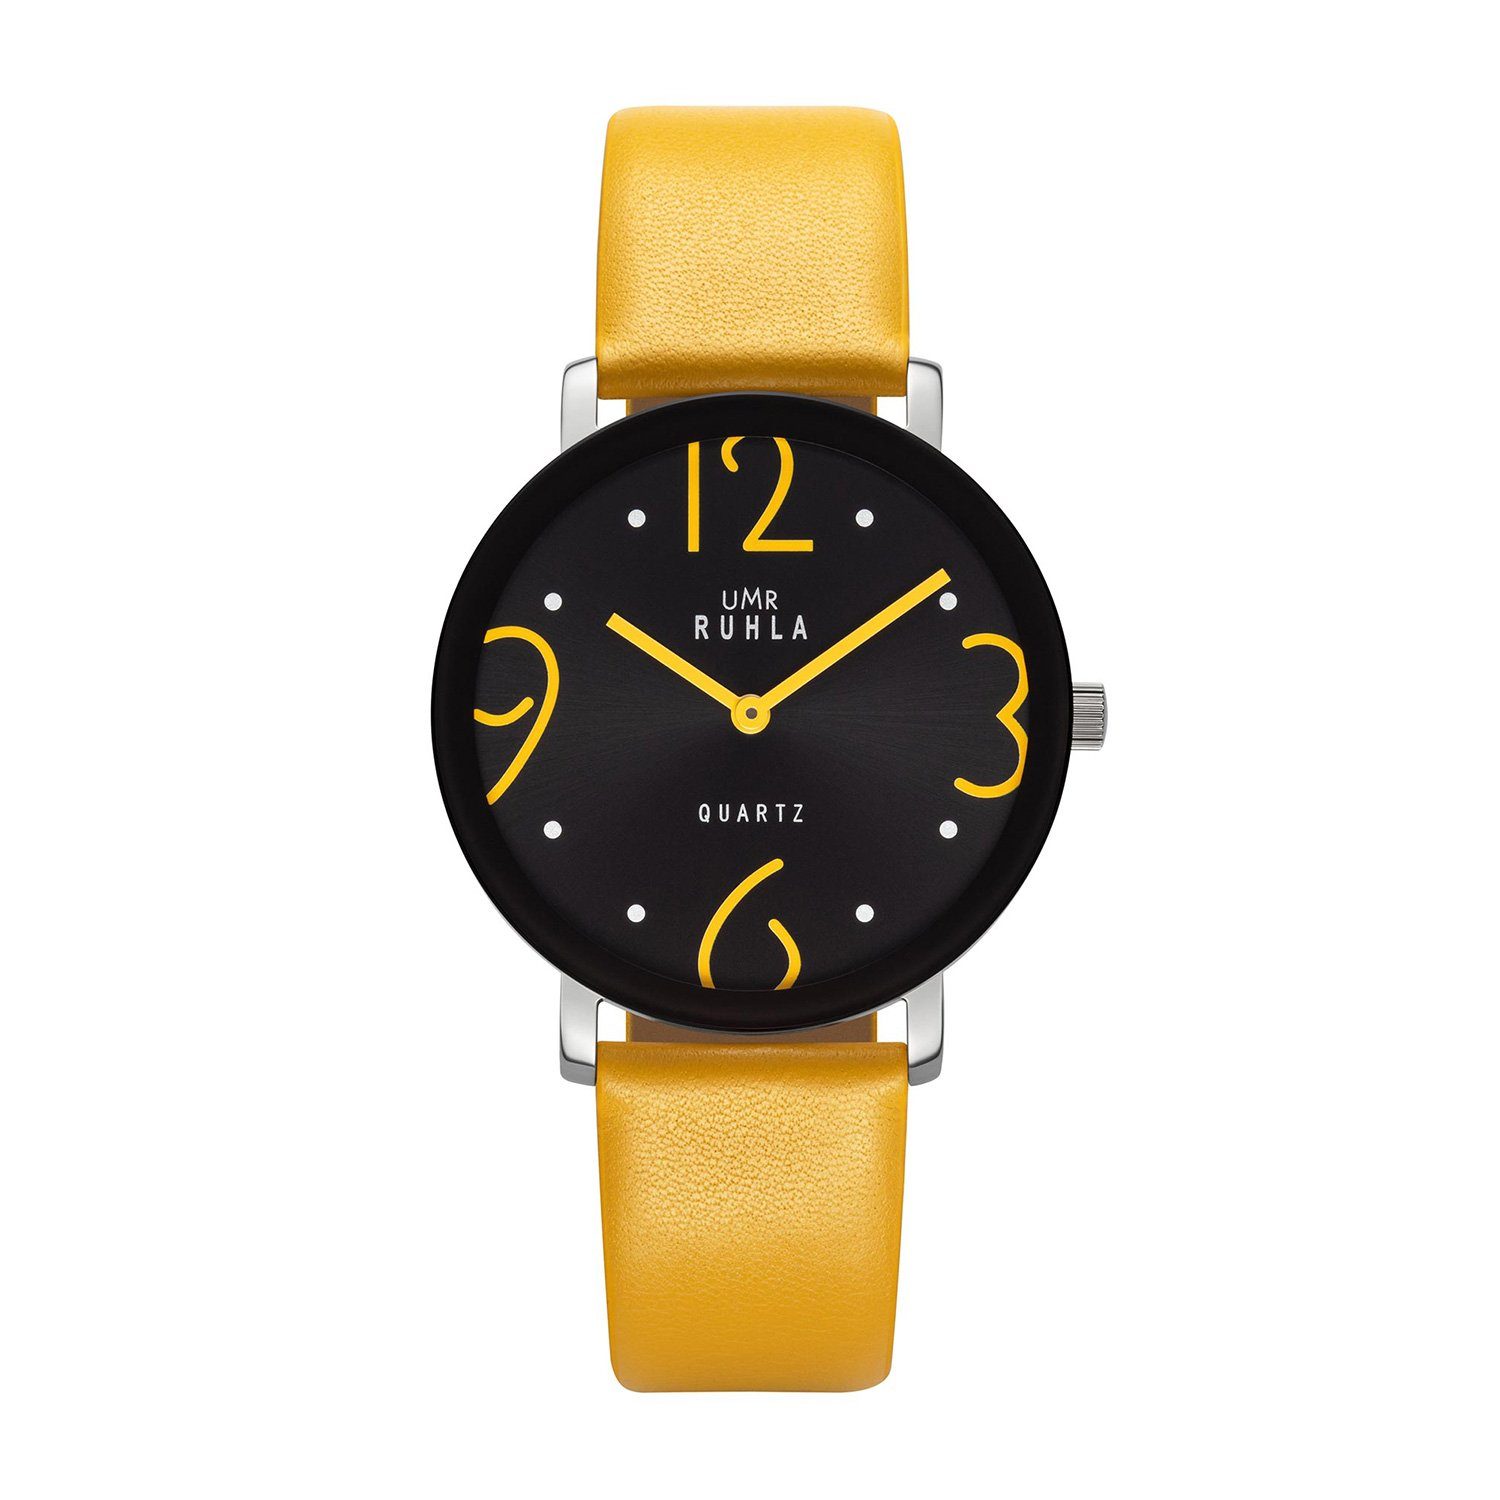 UMR Ruhla Quarzuhr Uhren Manufaktur Ruhla - Quarz-Armbanduhr - Lederband gelb